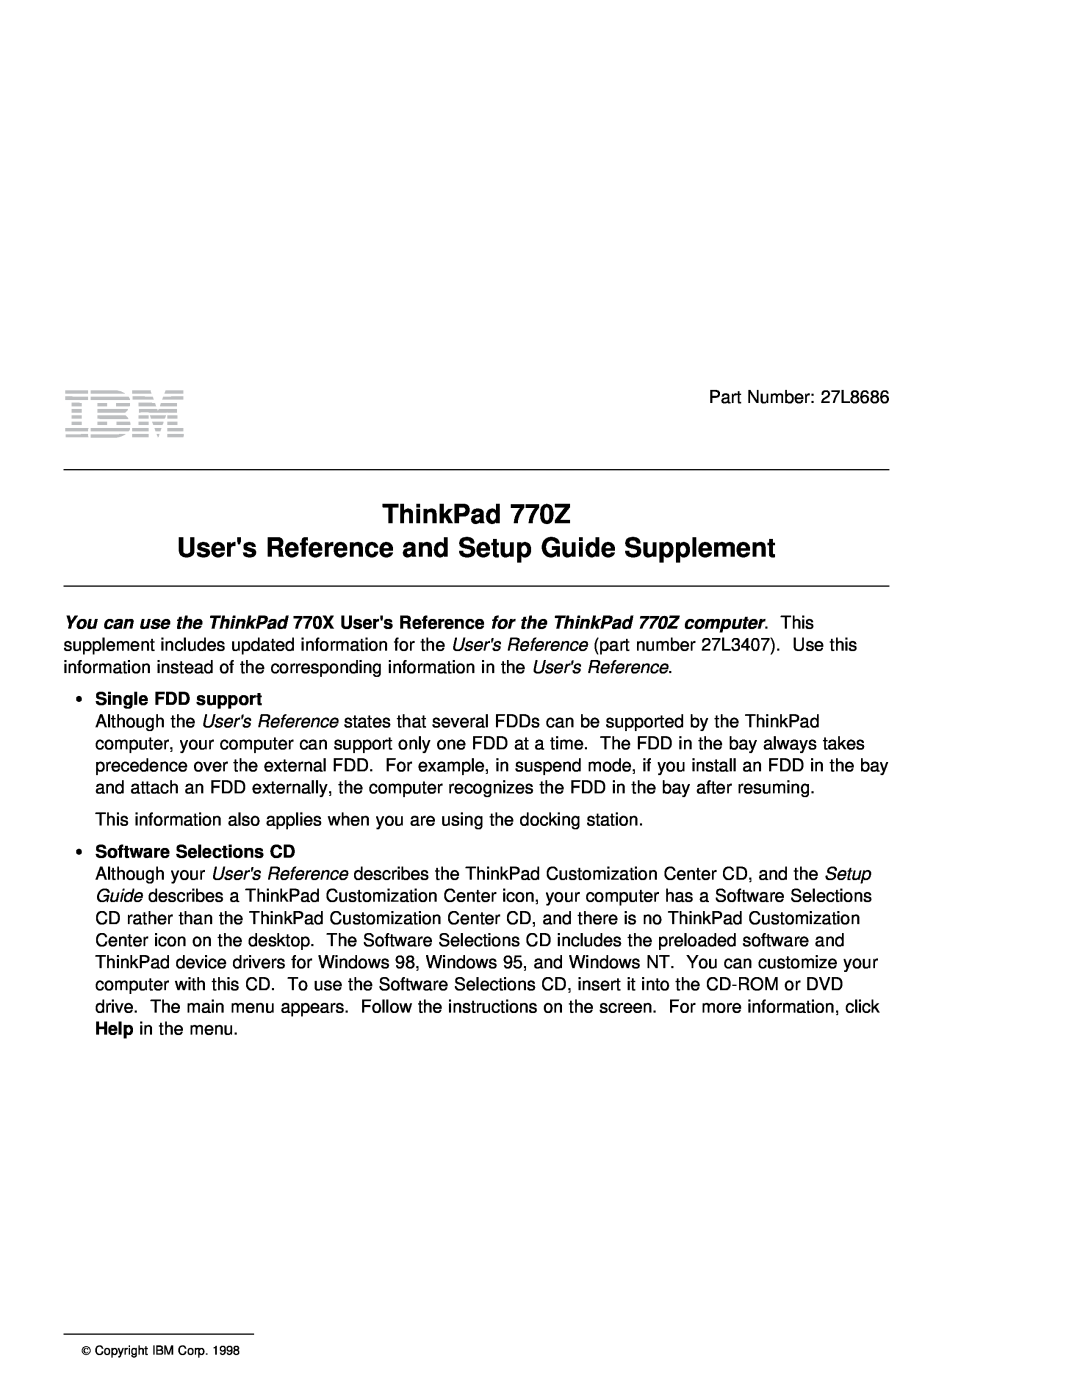 IBM 770Z setup guide Users, Supplement, Setup, Reference, Help 